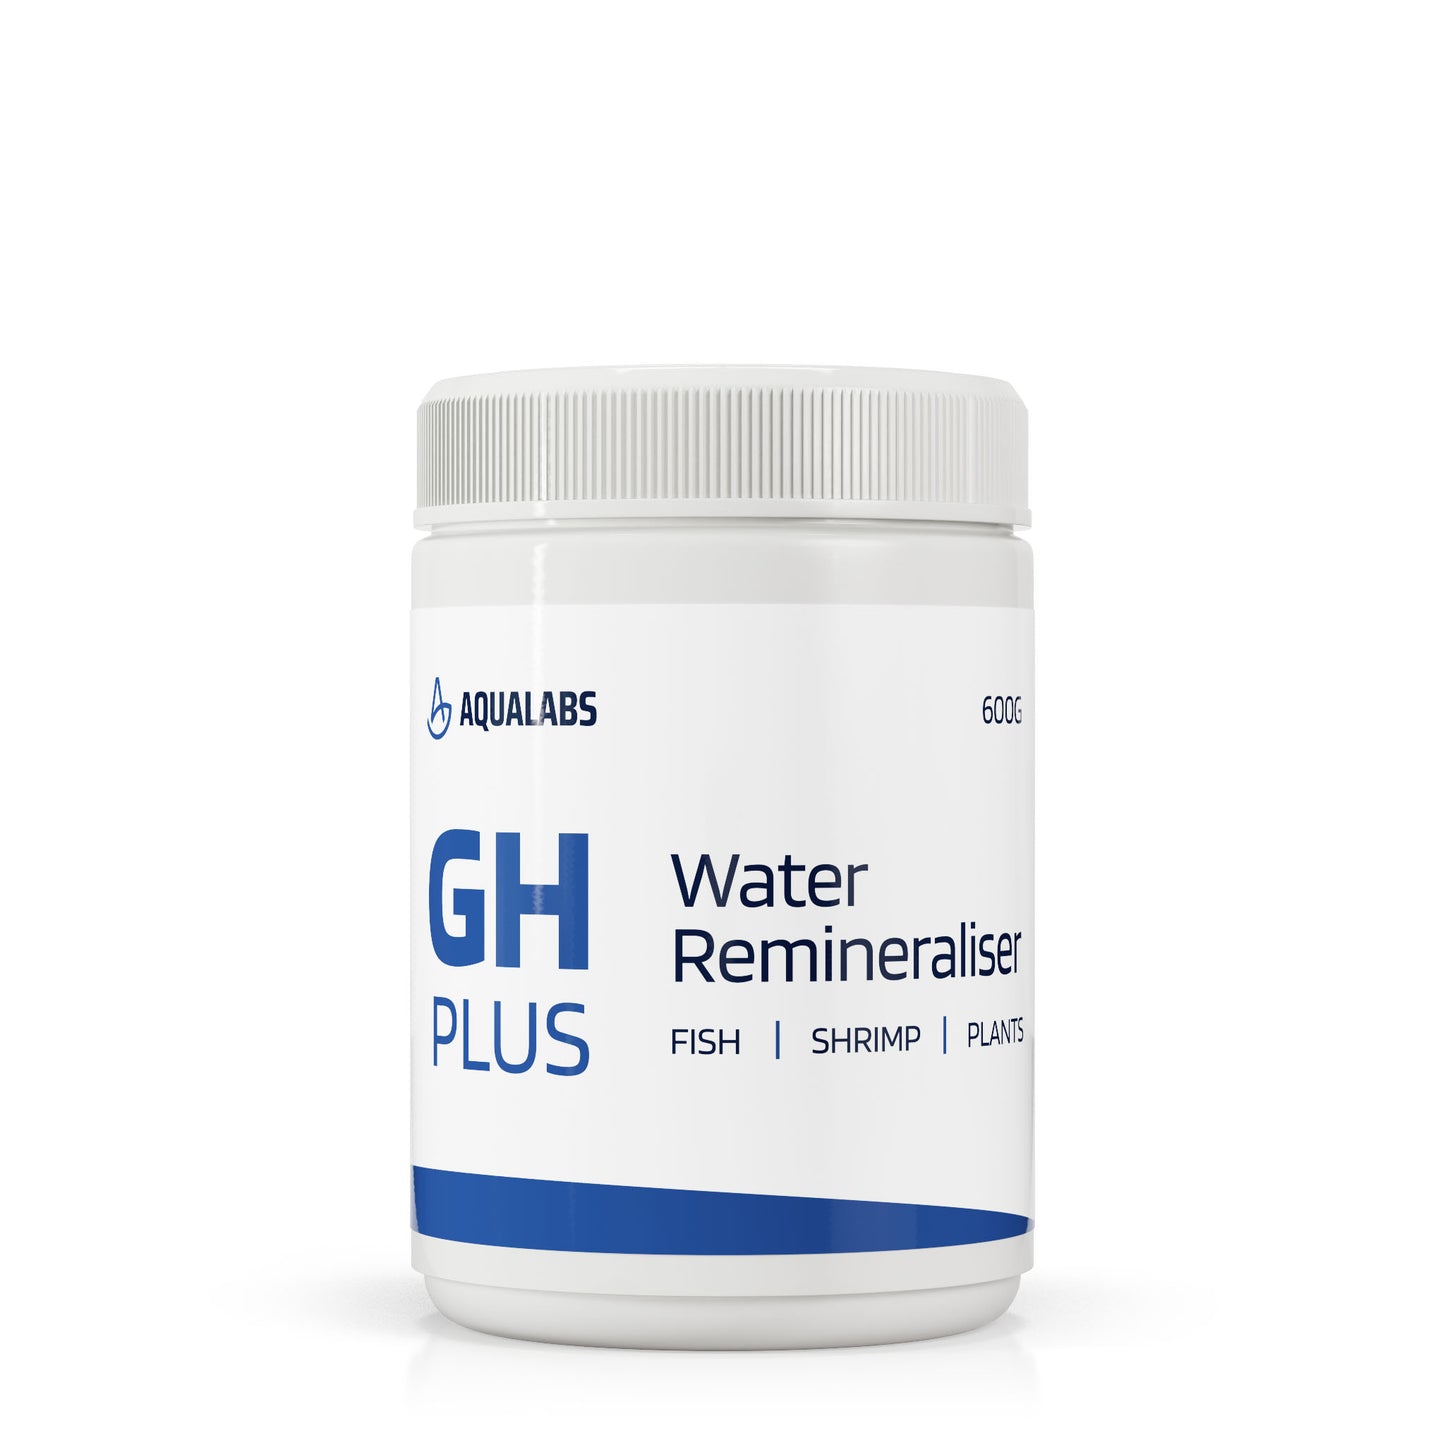 AquaLabs GH Plus (600g)